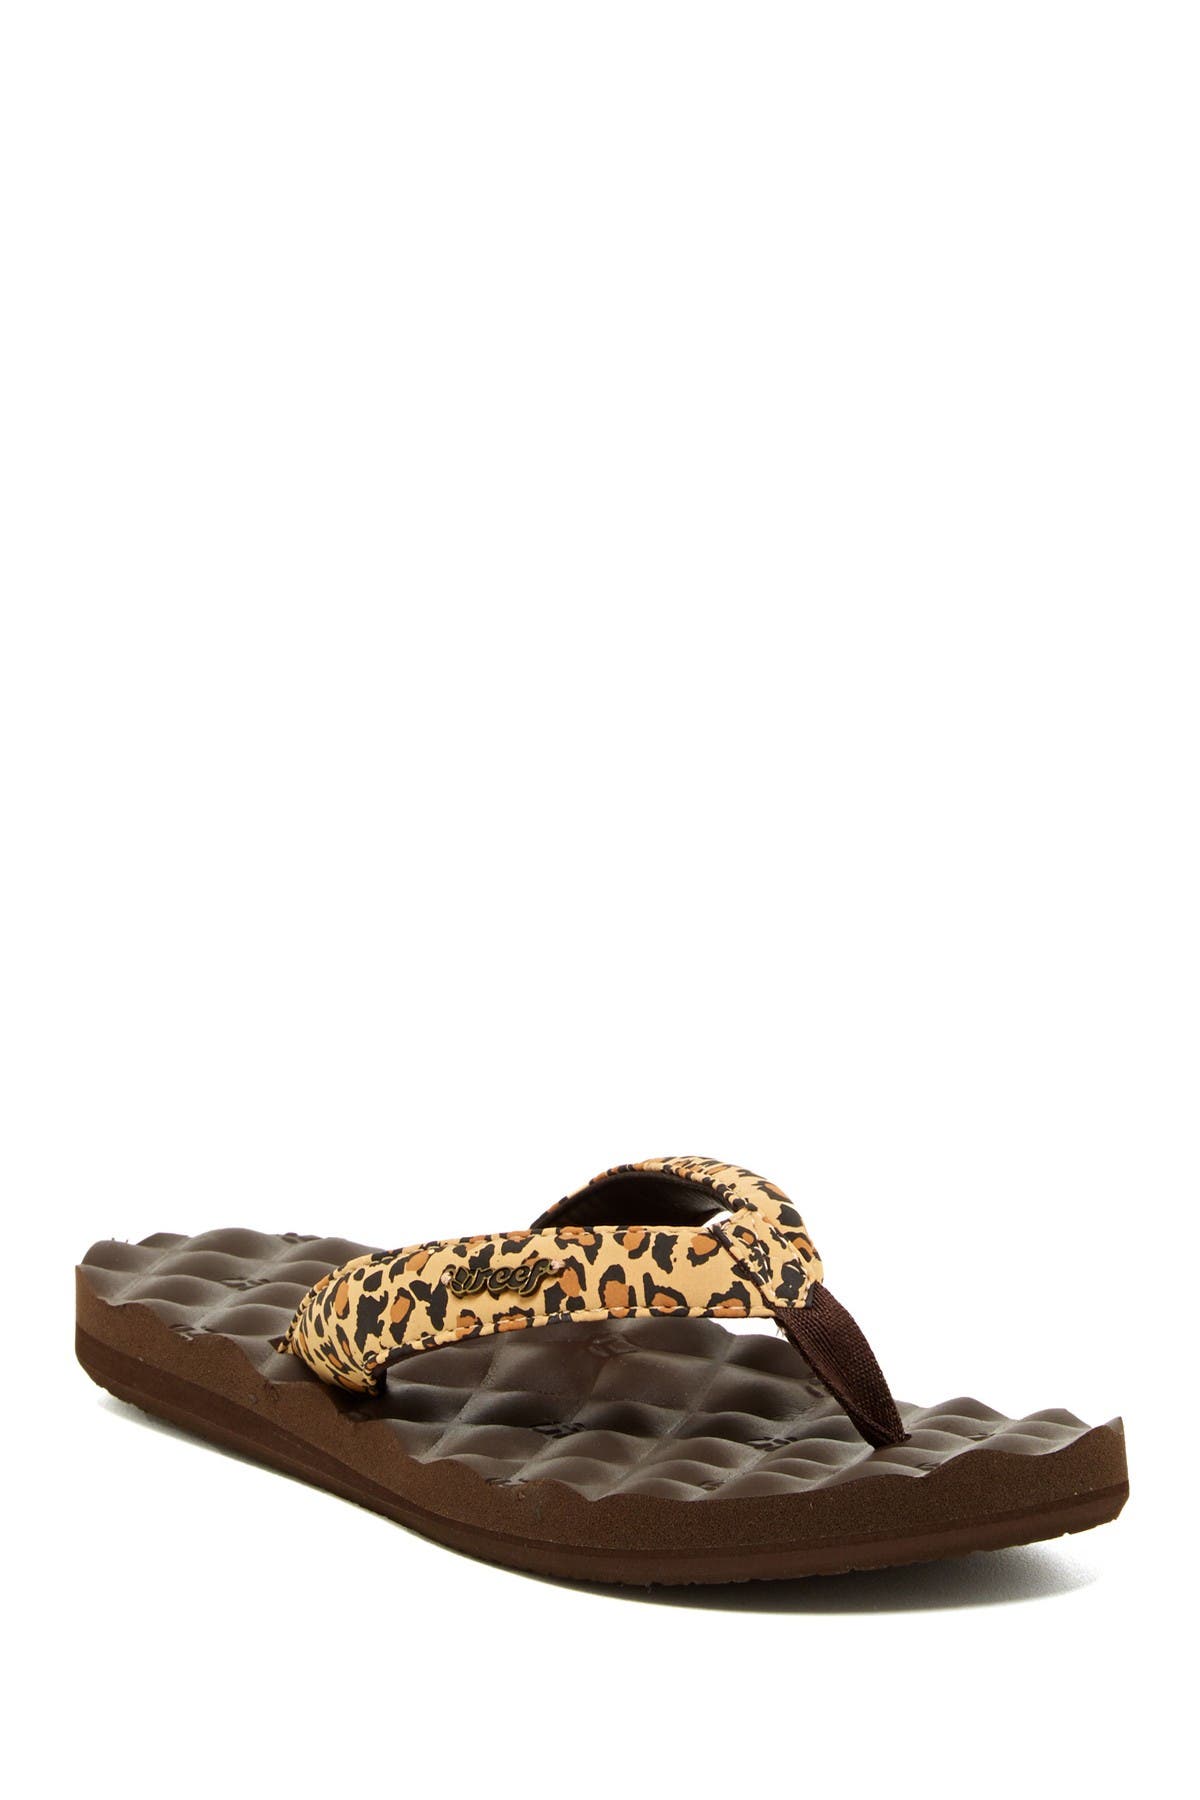 reef leopard print flip flops